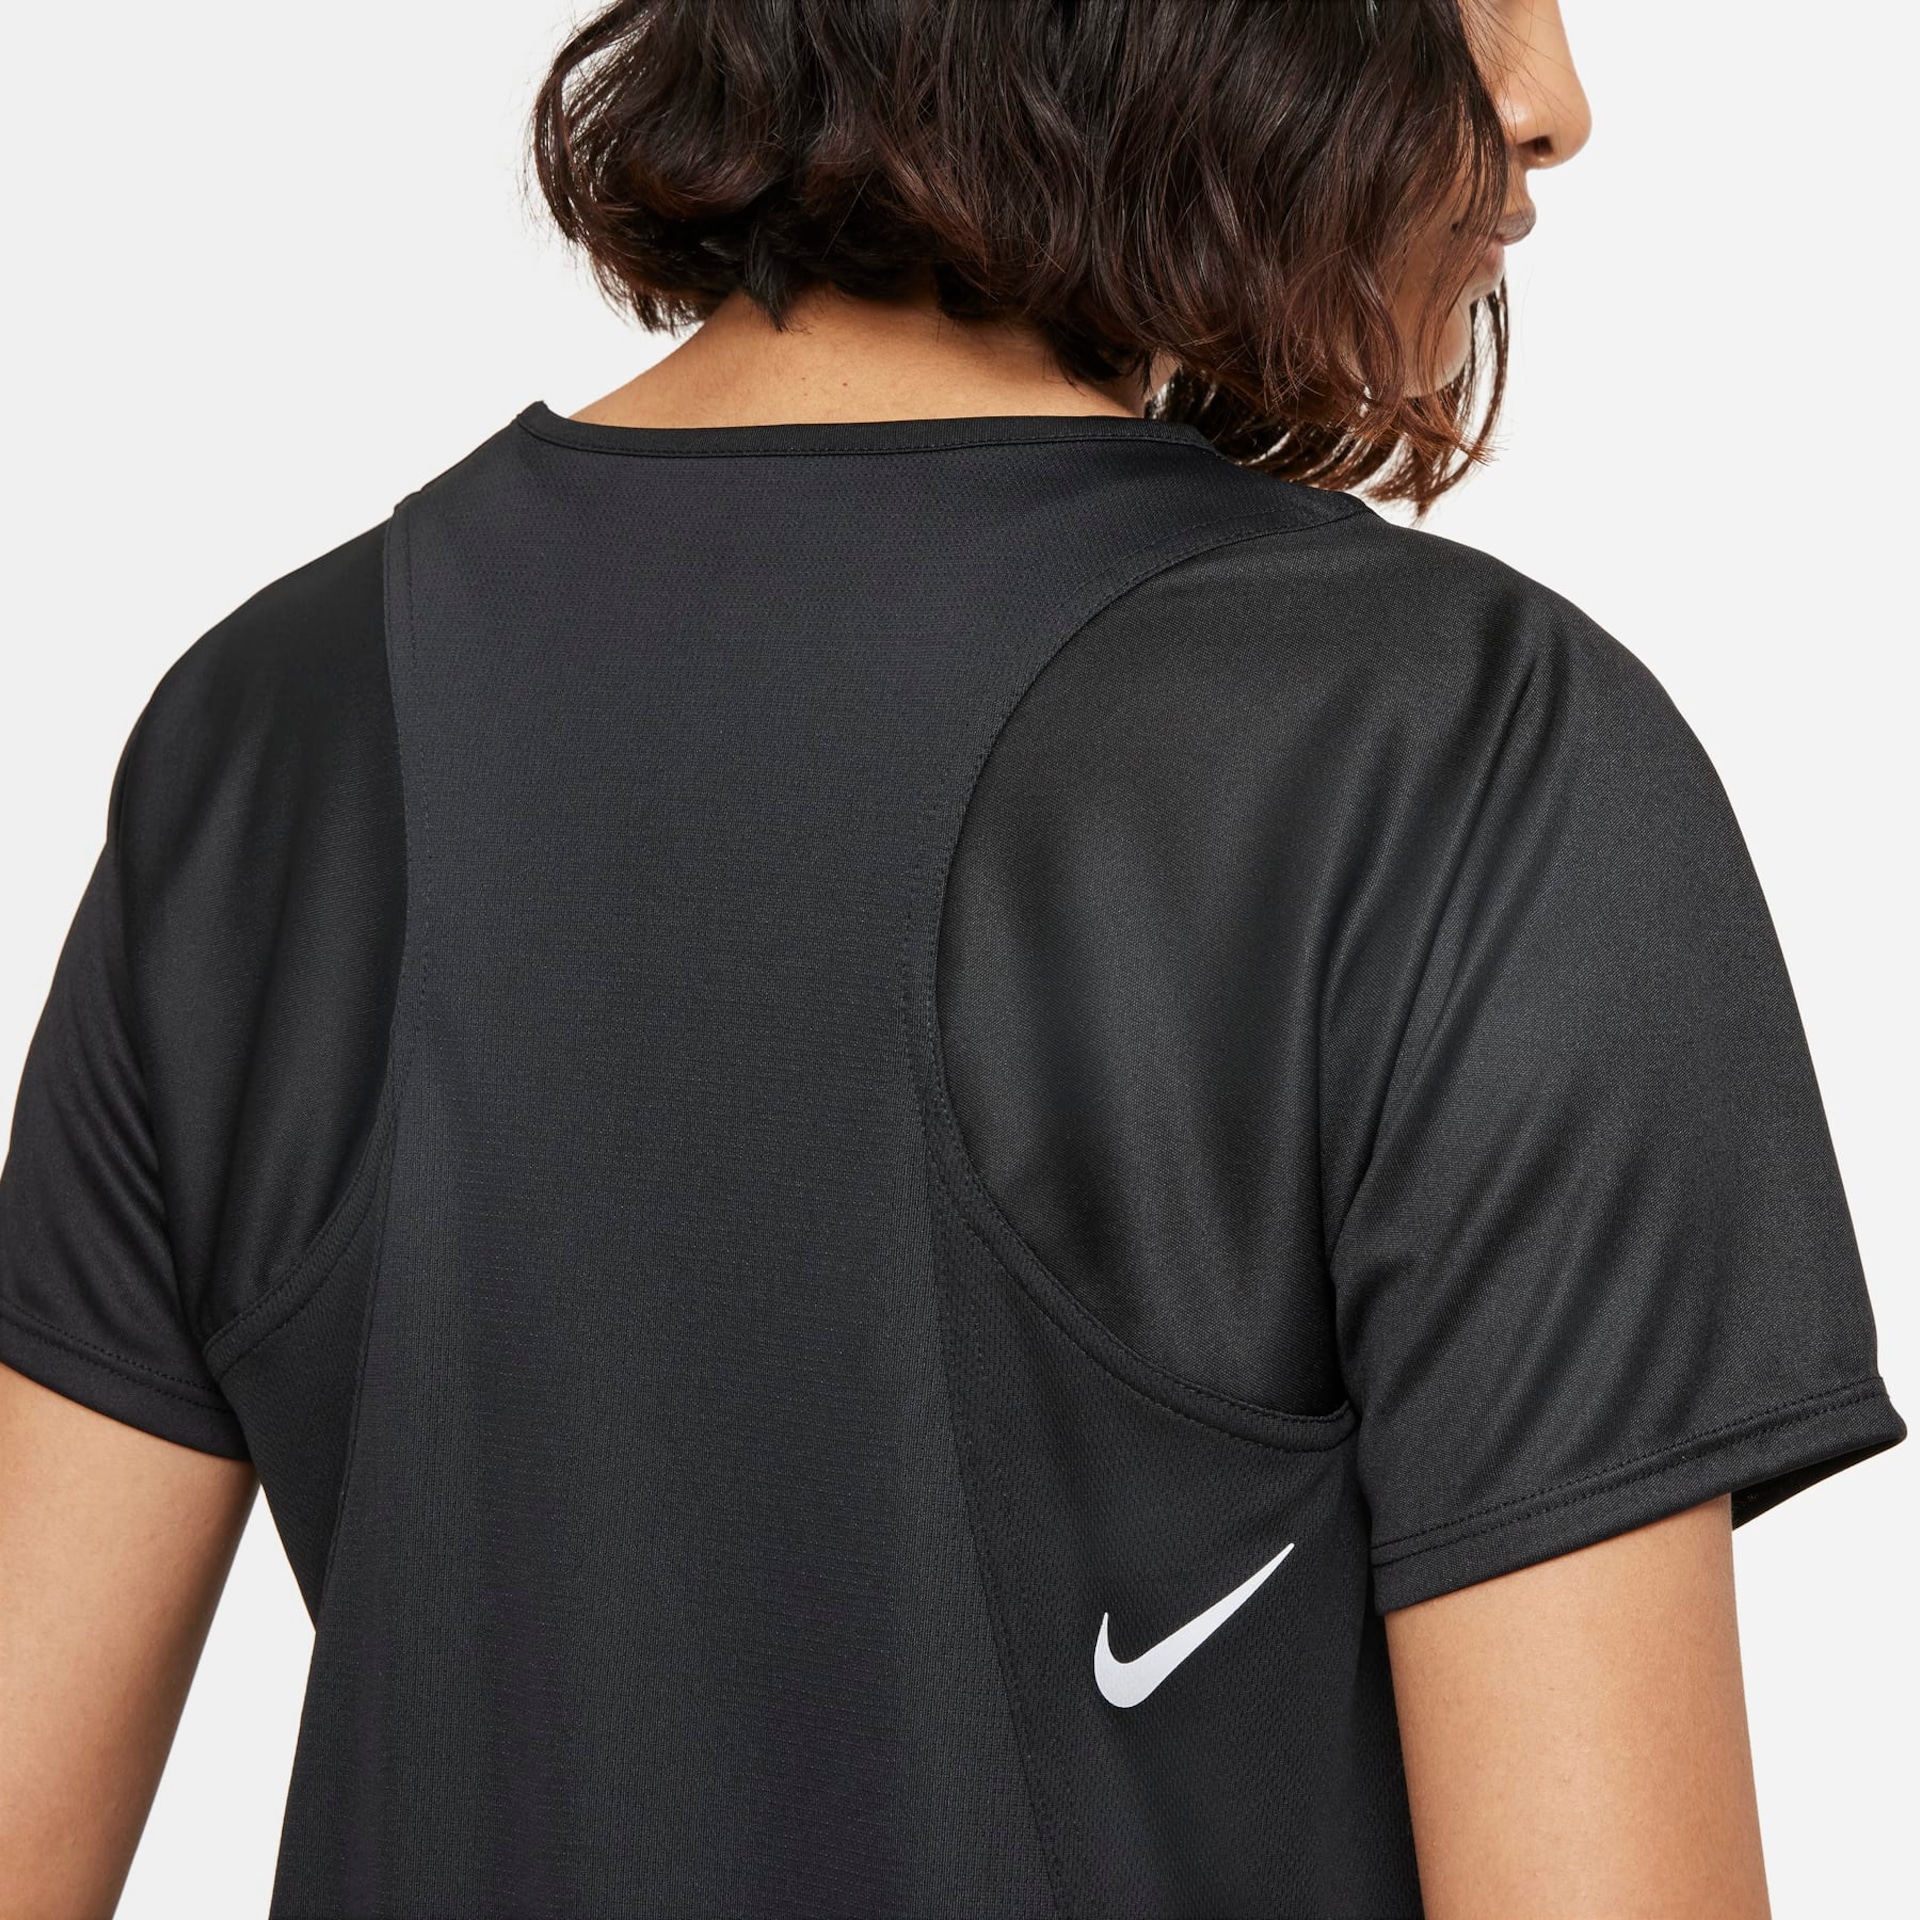 Camiseta Nike Dri-FIT Race Feminina - Foto 5